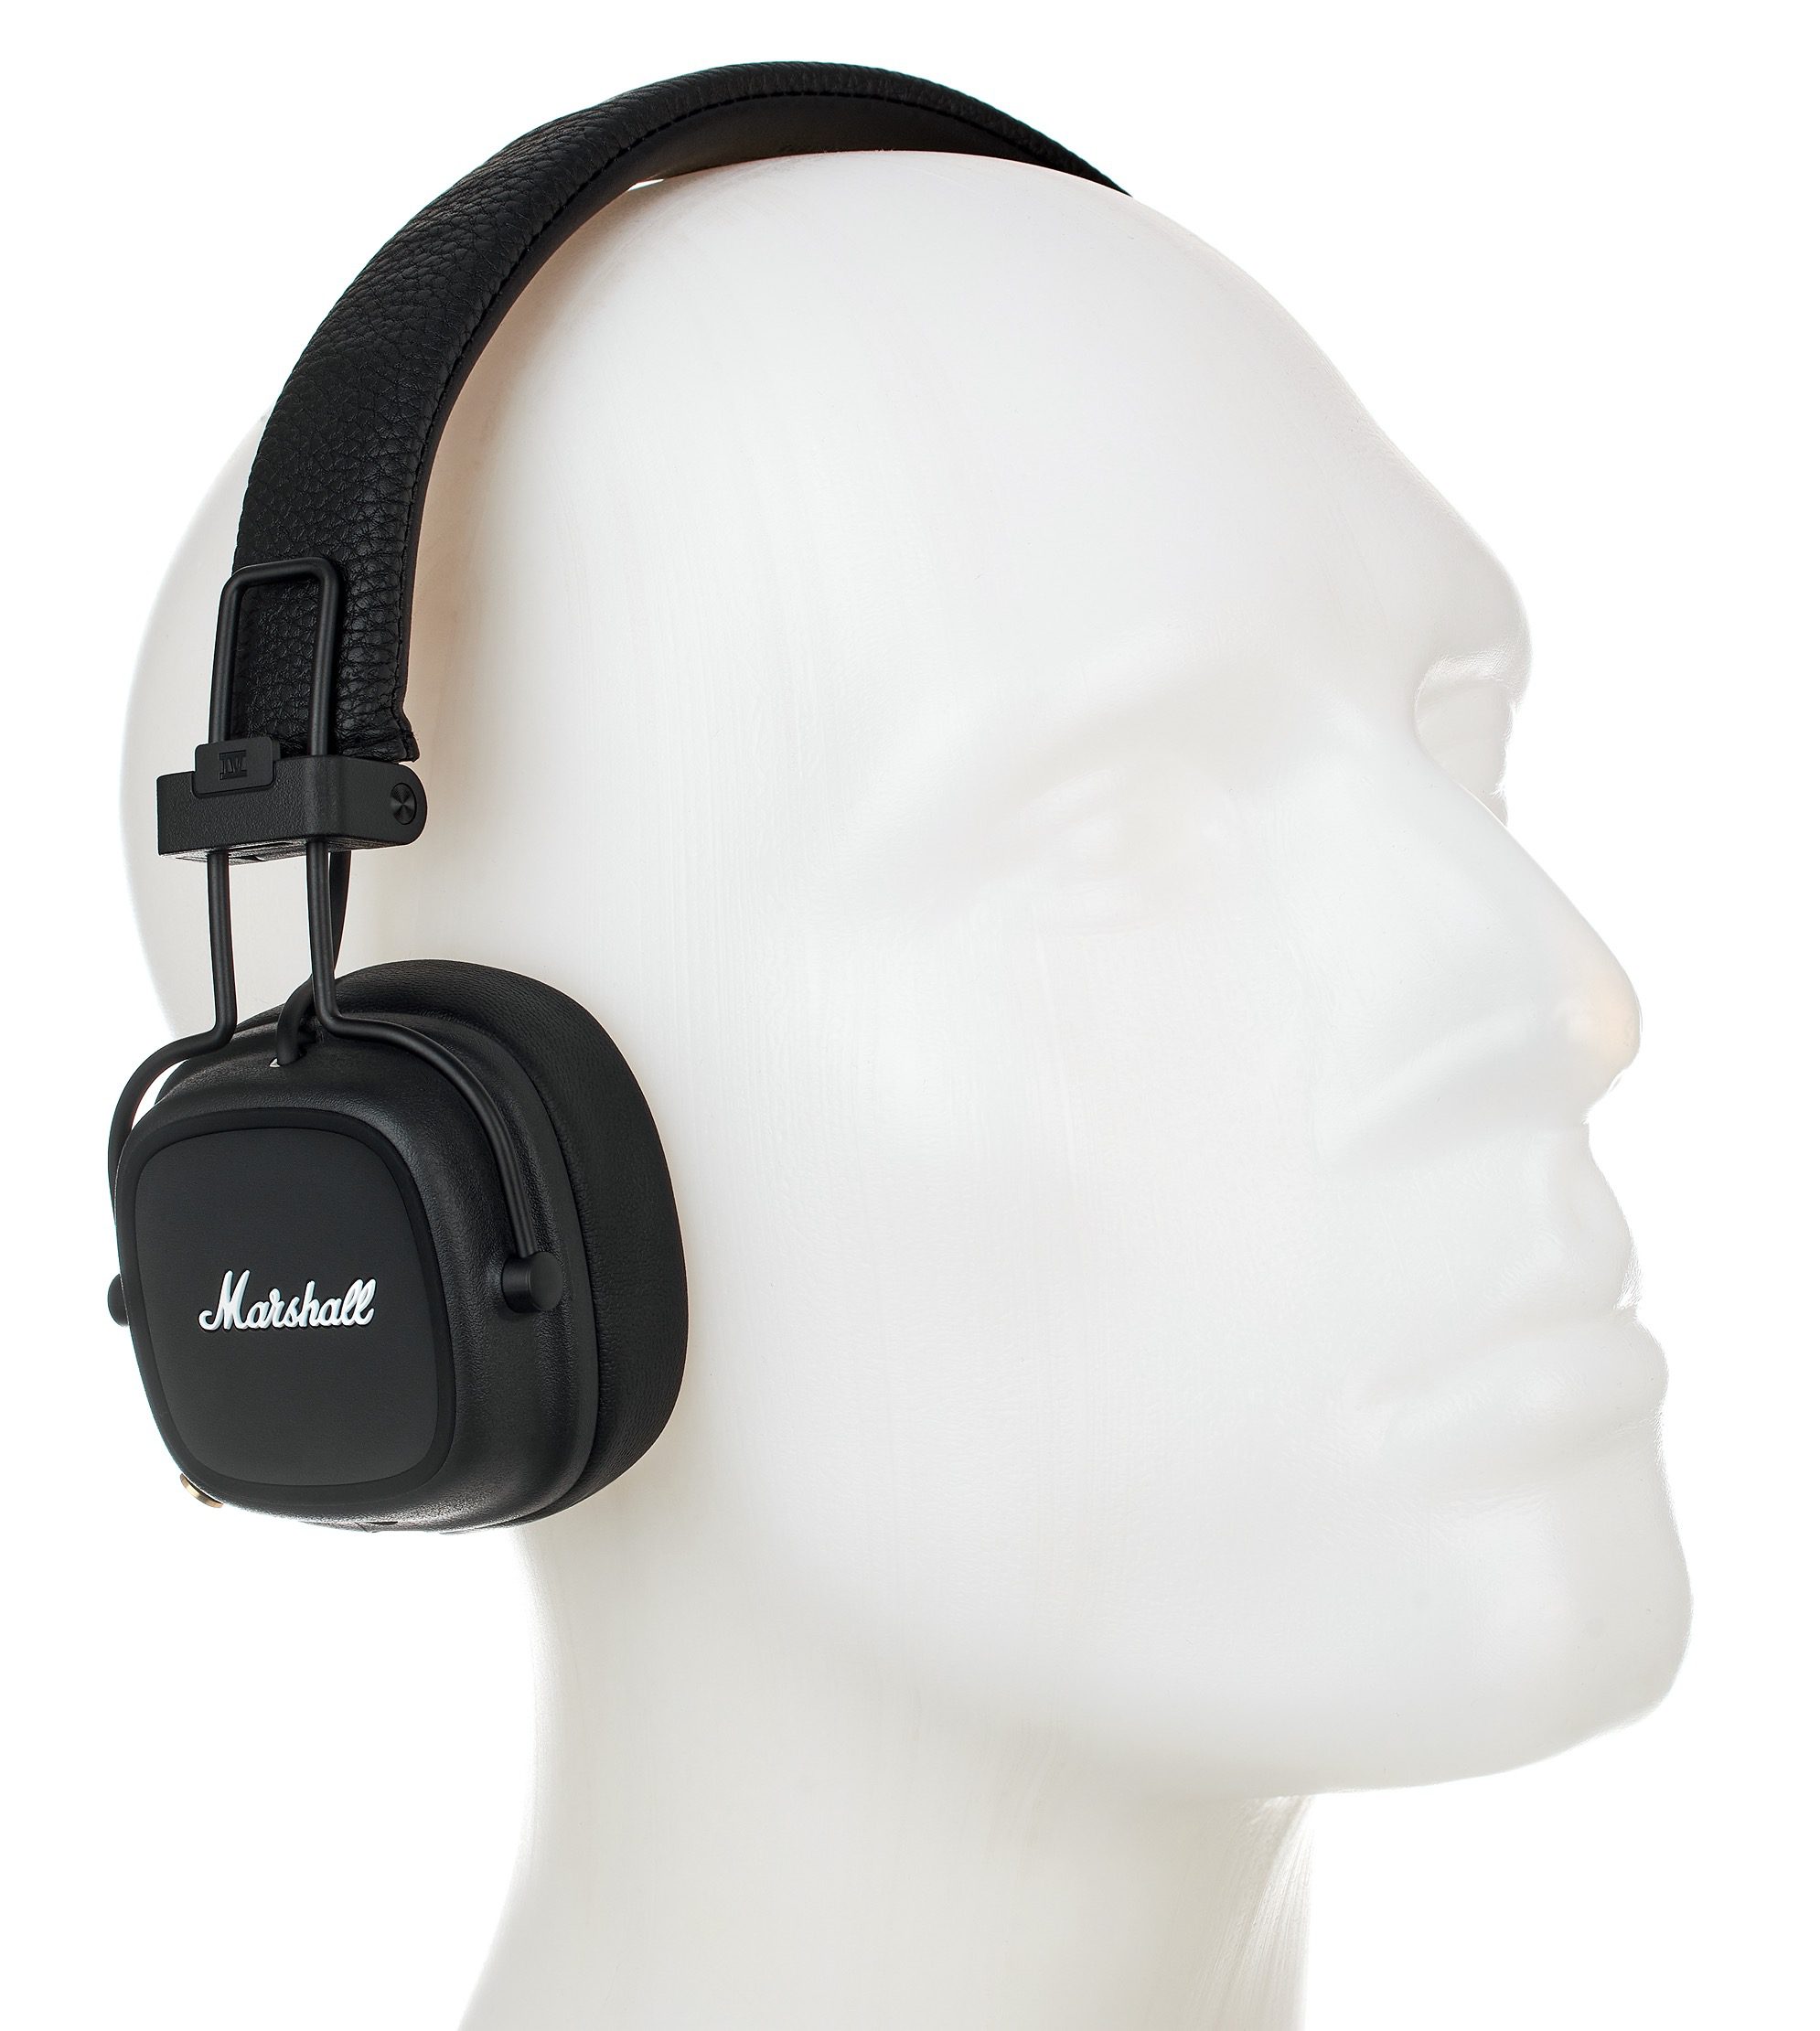 Marshall Major IV wireless headphones review 